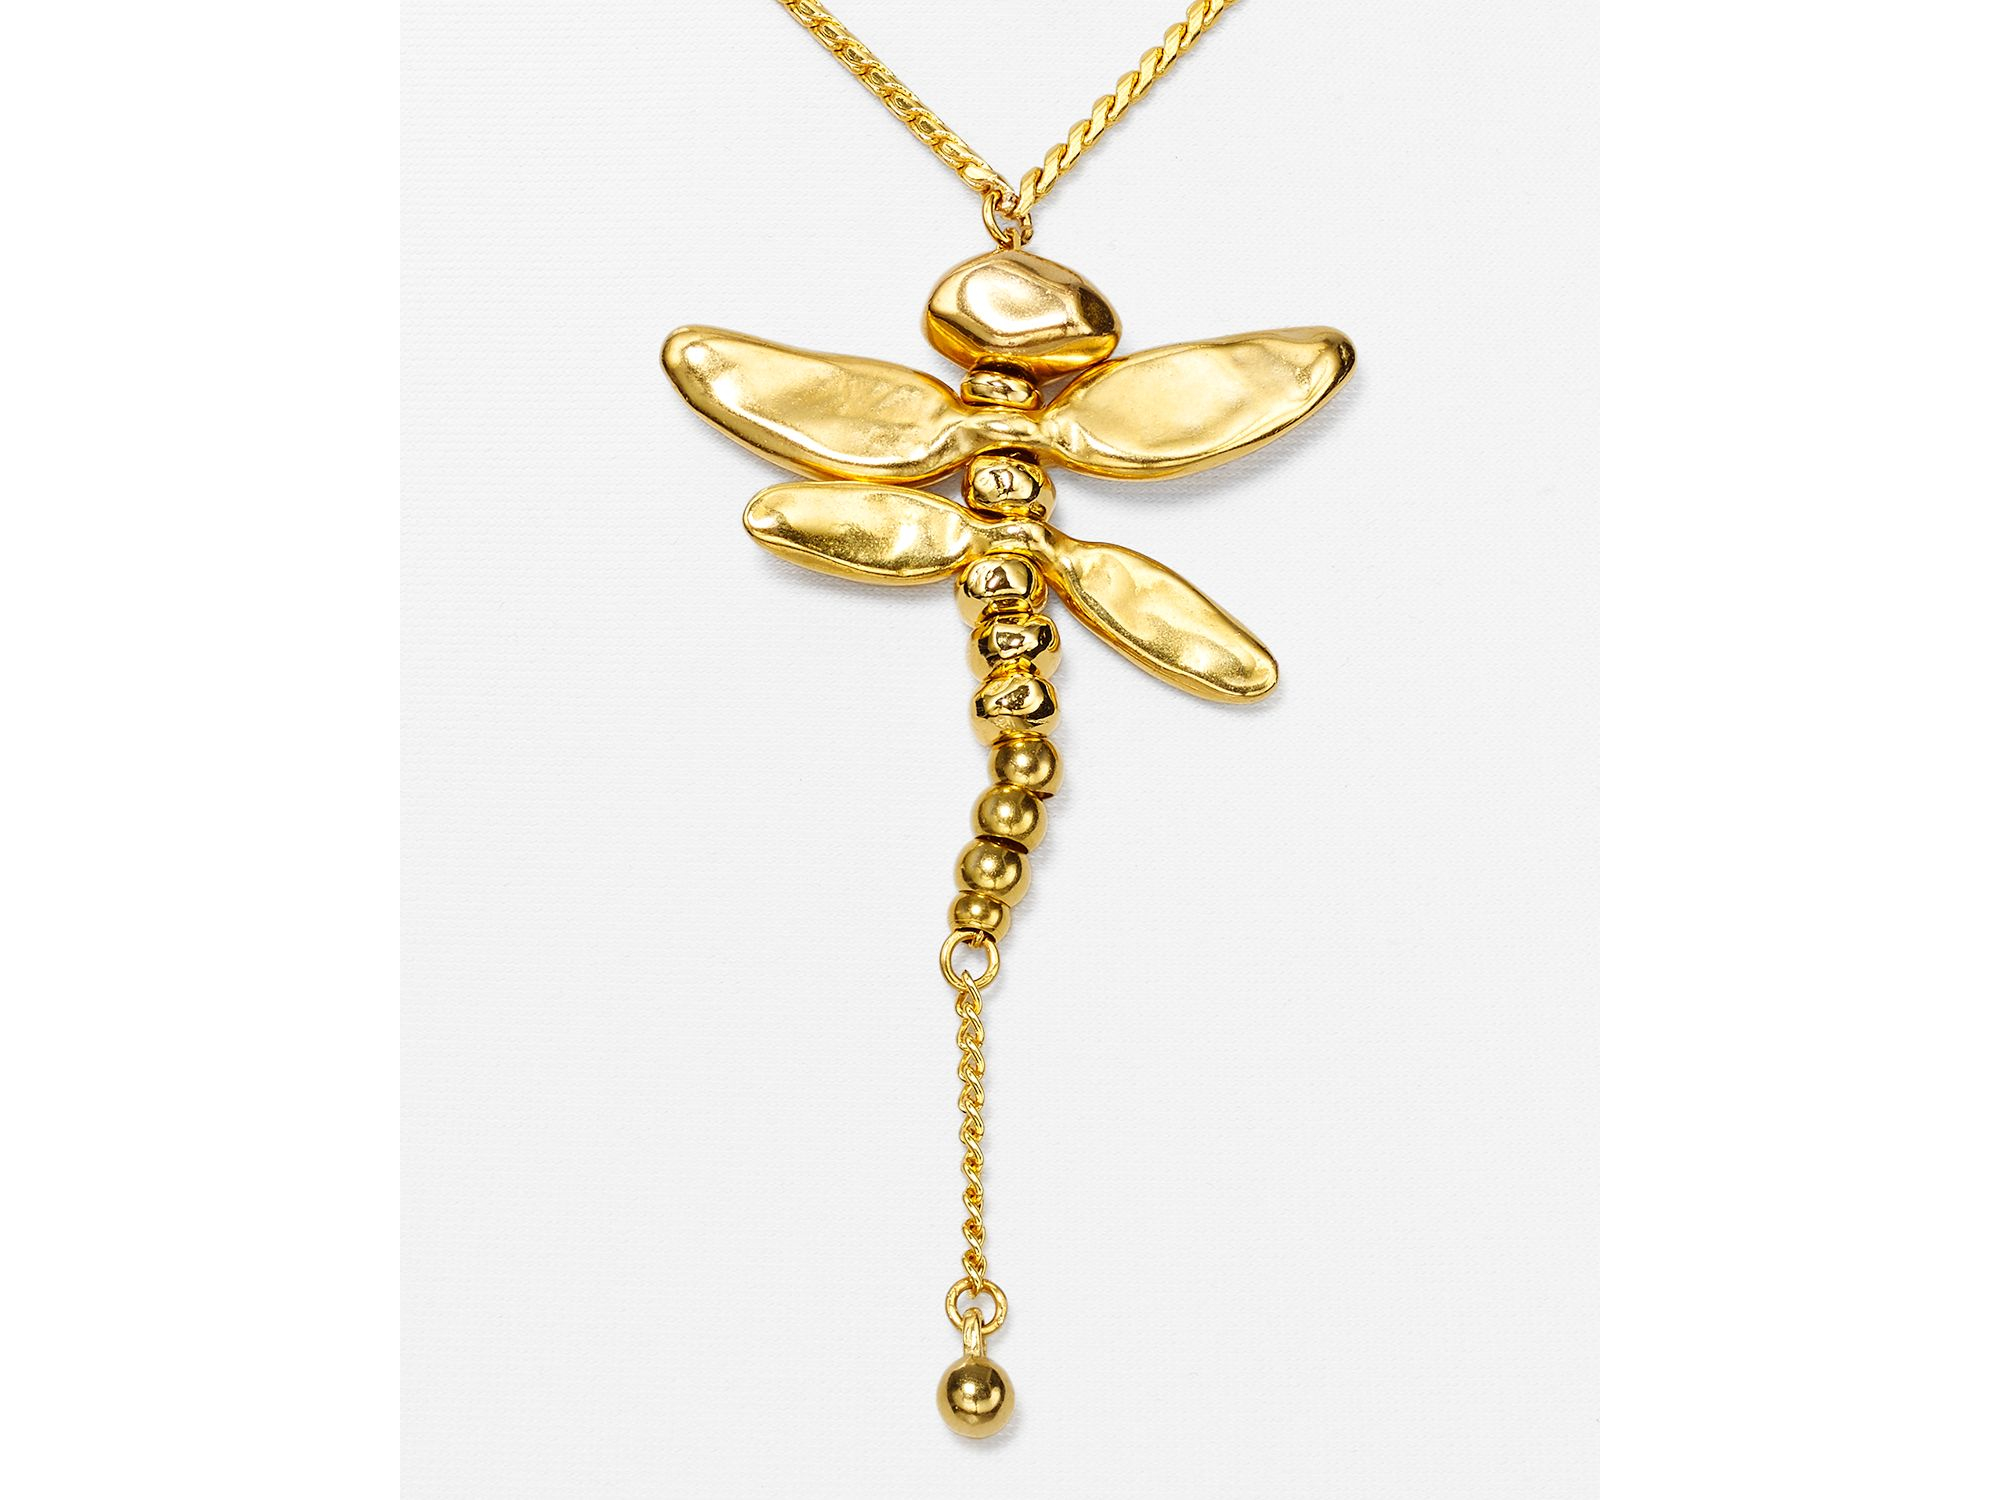 Uno De 50 Dragonfly Pendant Necklace, 17" in Metallic - Lyst